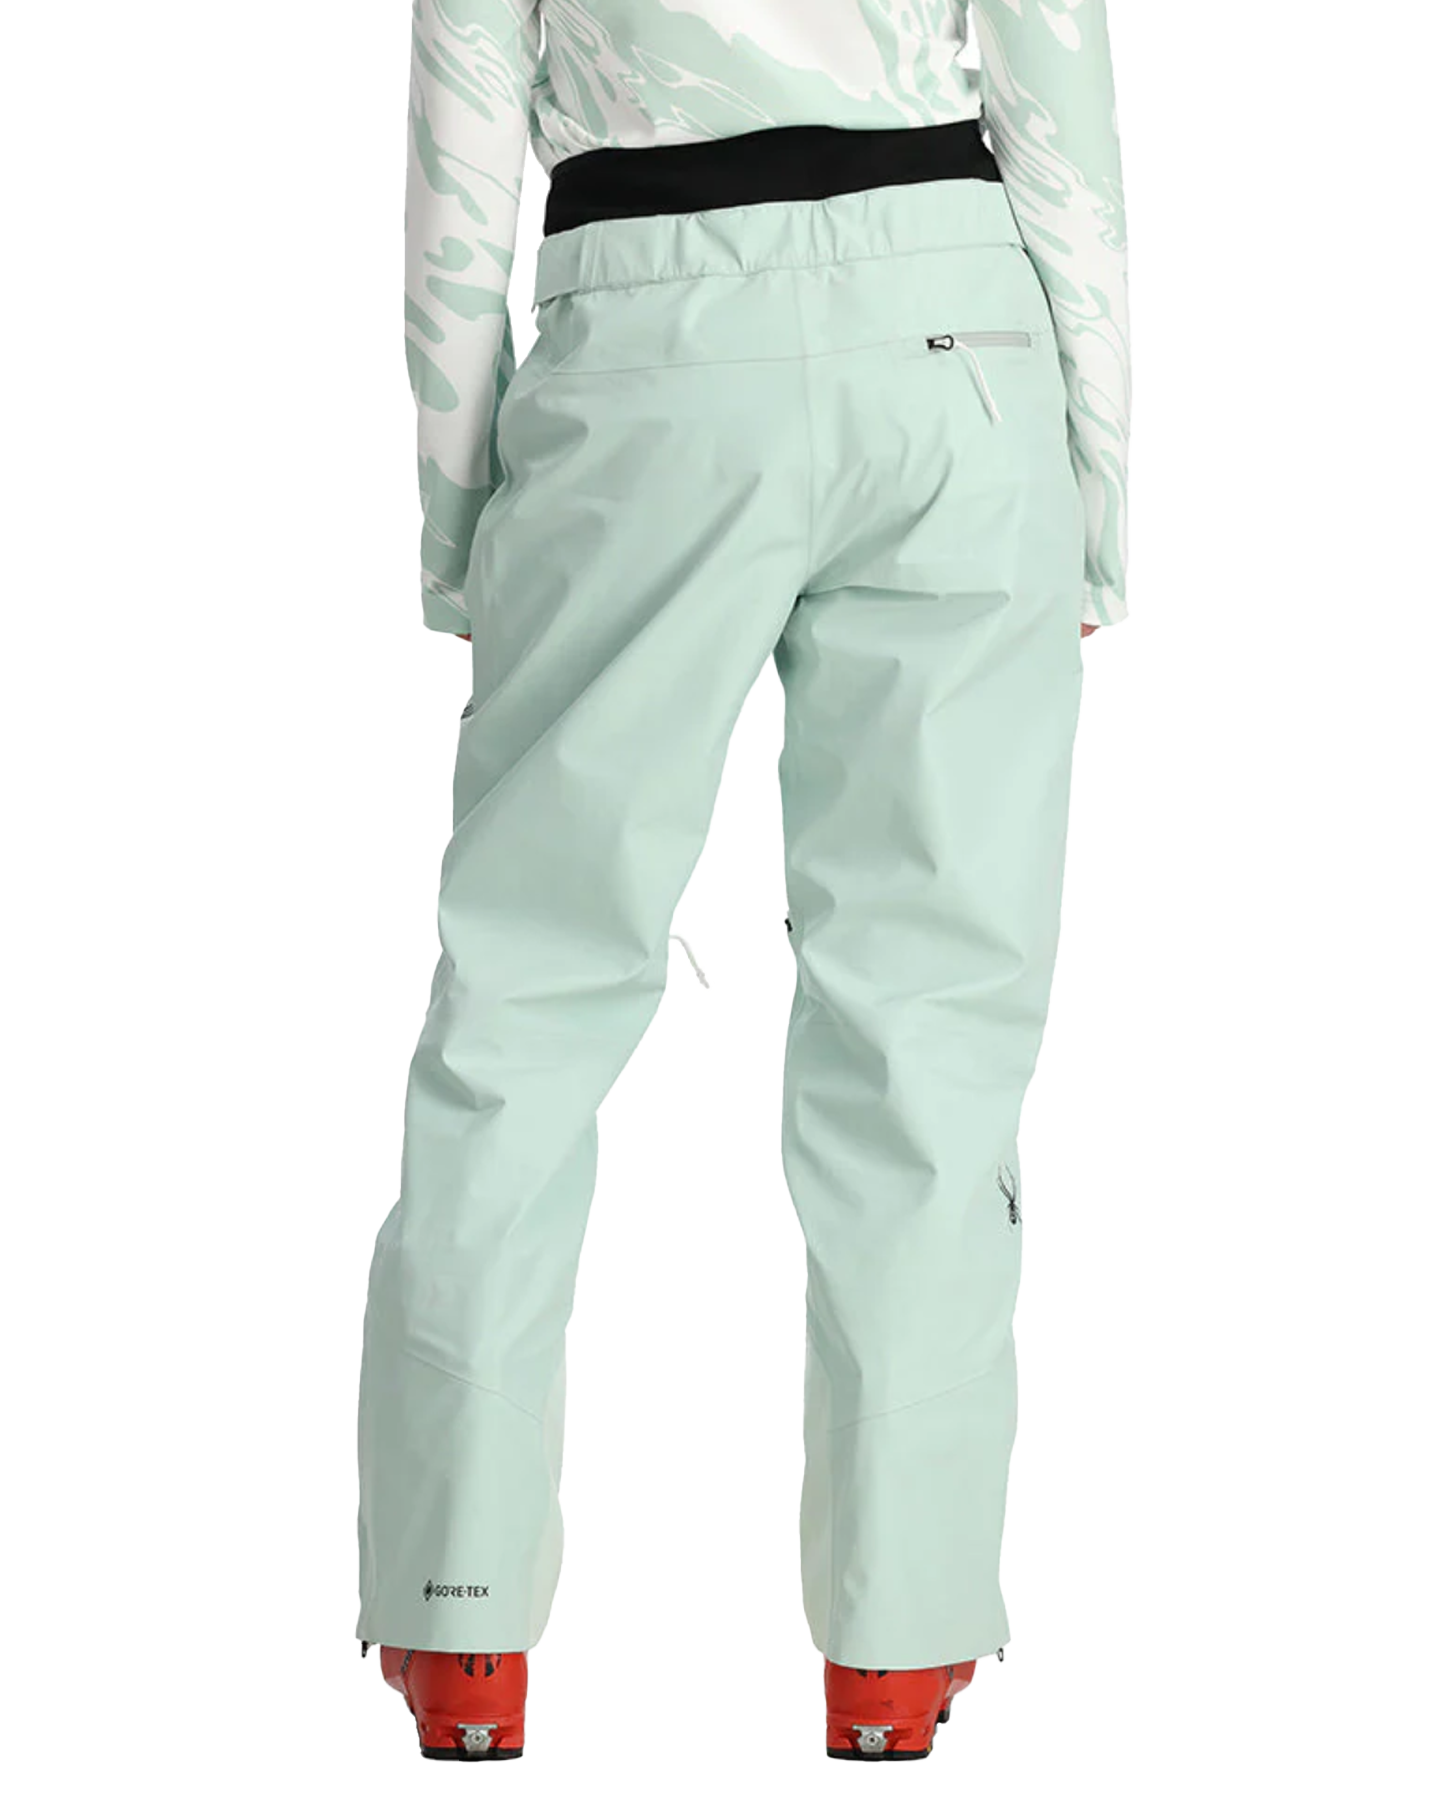 Spyder Women's Turret Gtx Shell Pants - Wintergreen Women's Snow Pants - SnowSkiersWarehouse